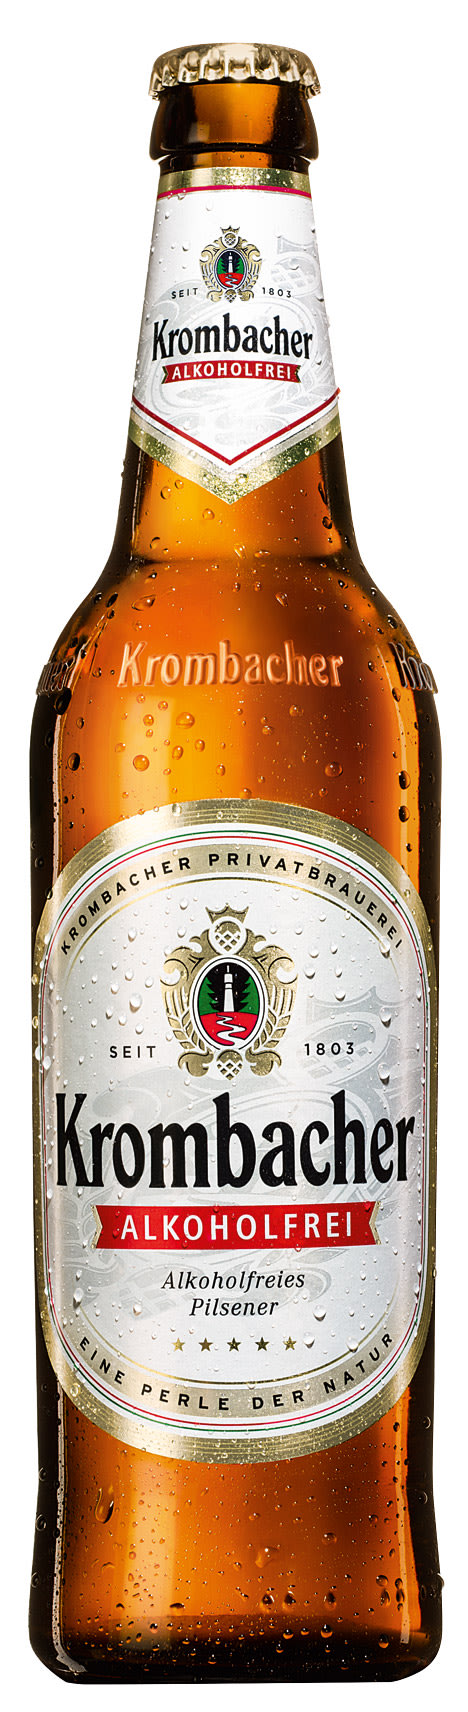 Krombacher Pils alkoholfrei Kasten 20 x 0,5 l Glas Mehrweg